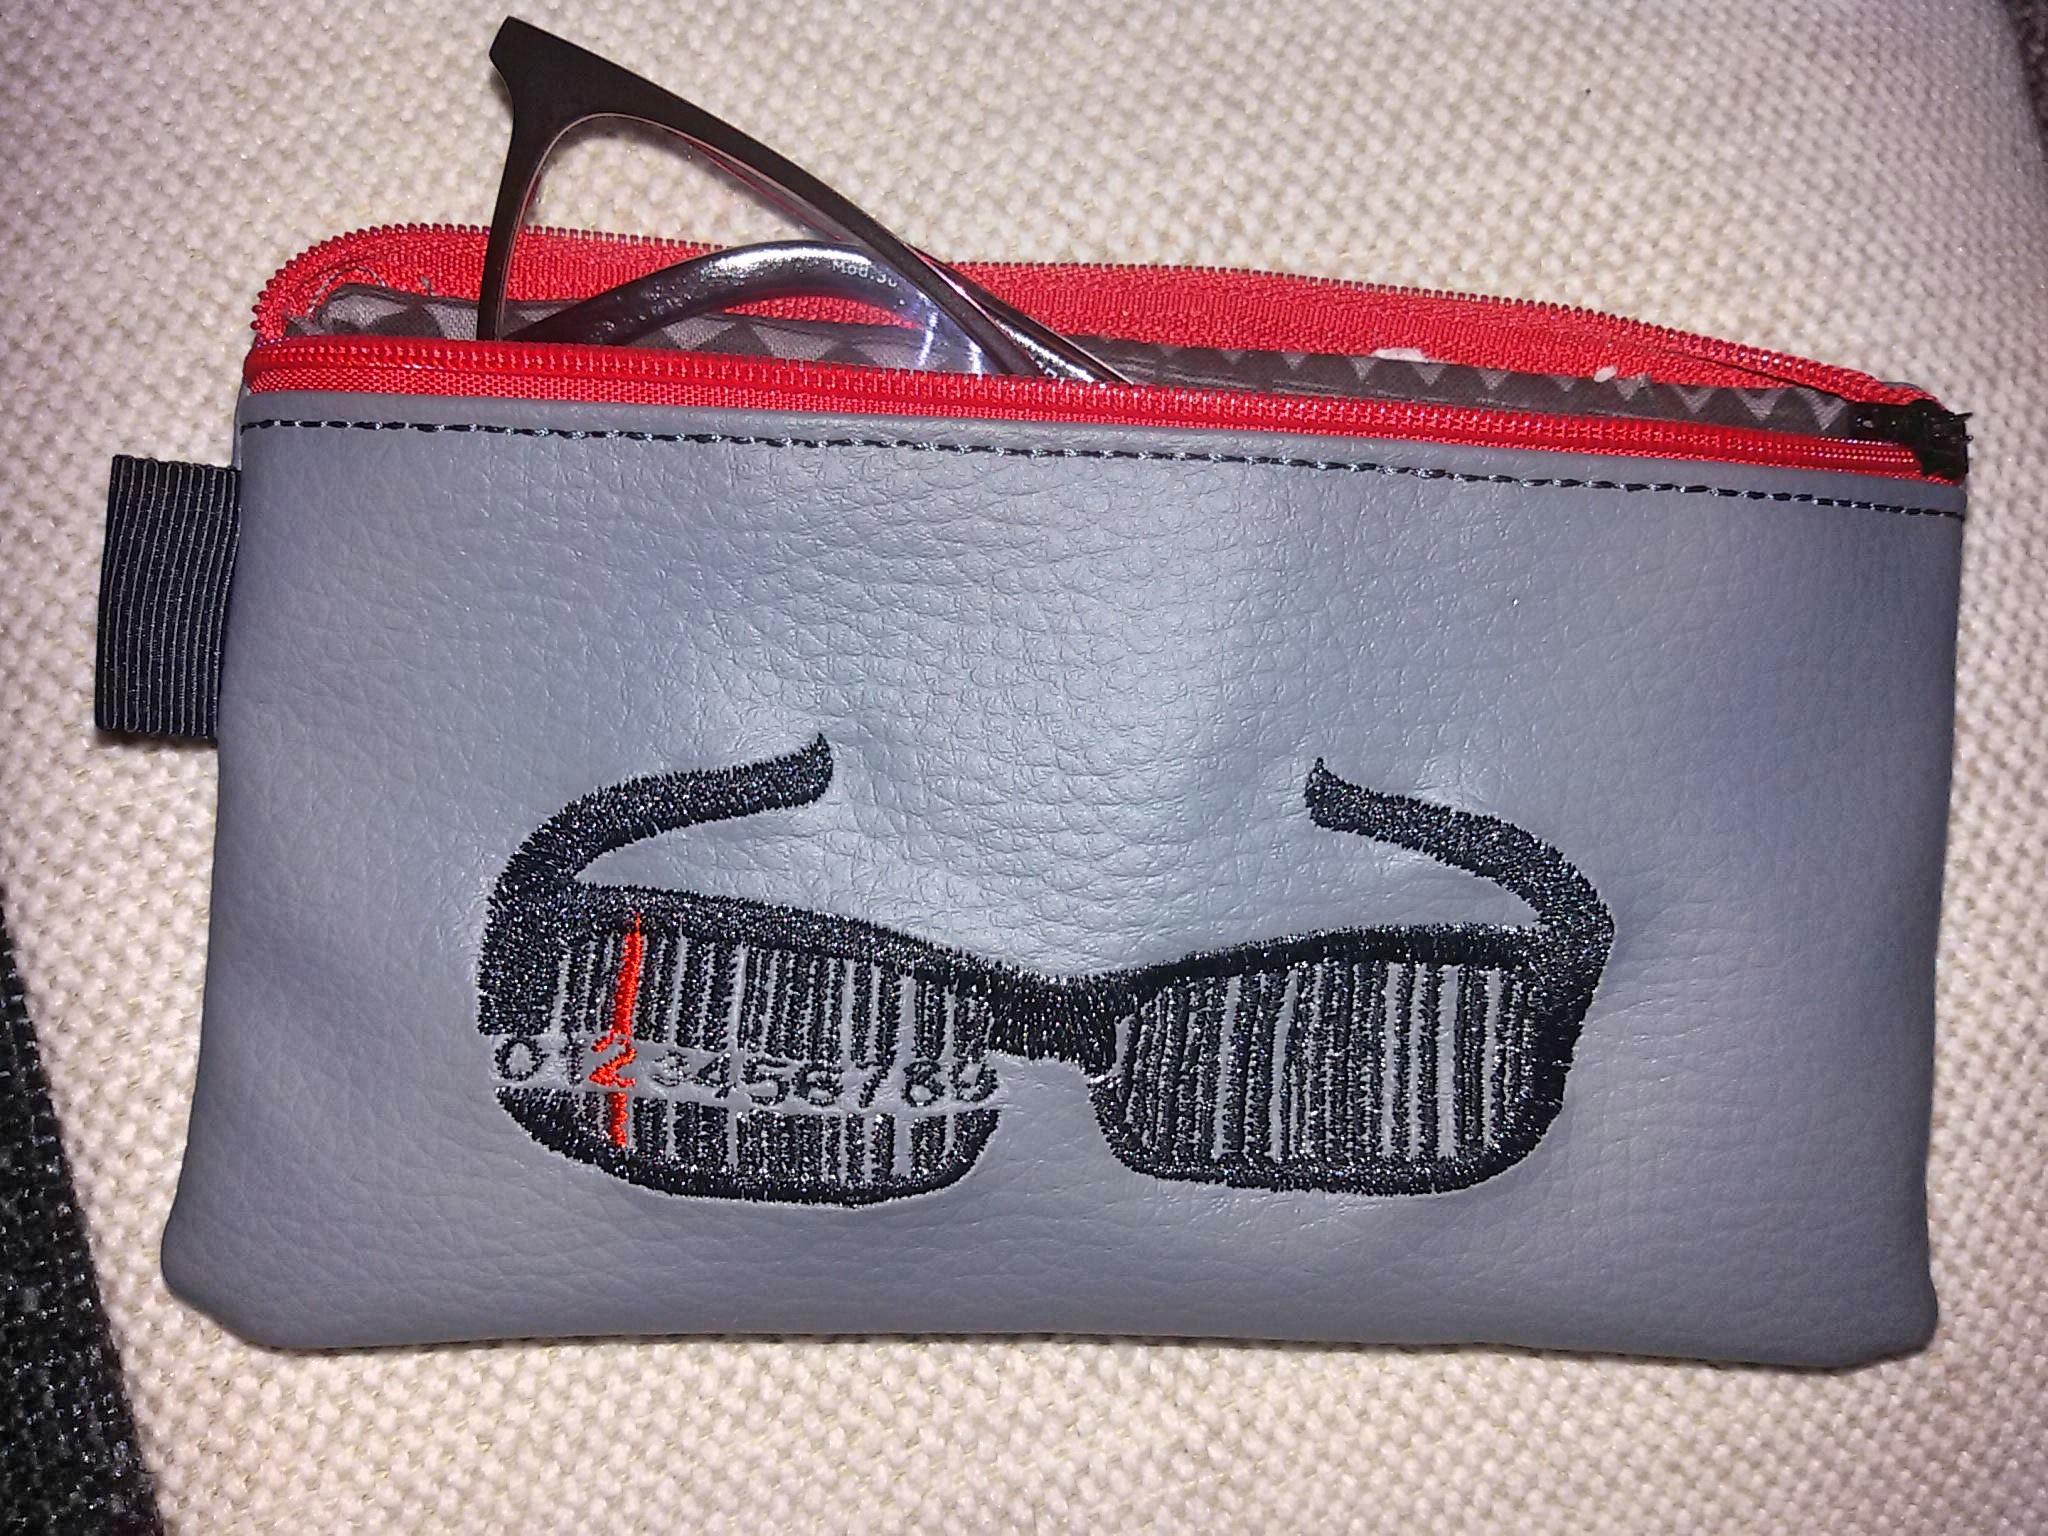 Embroidered handbag with Bar code glasses free design